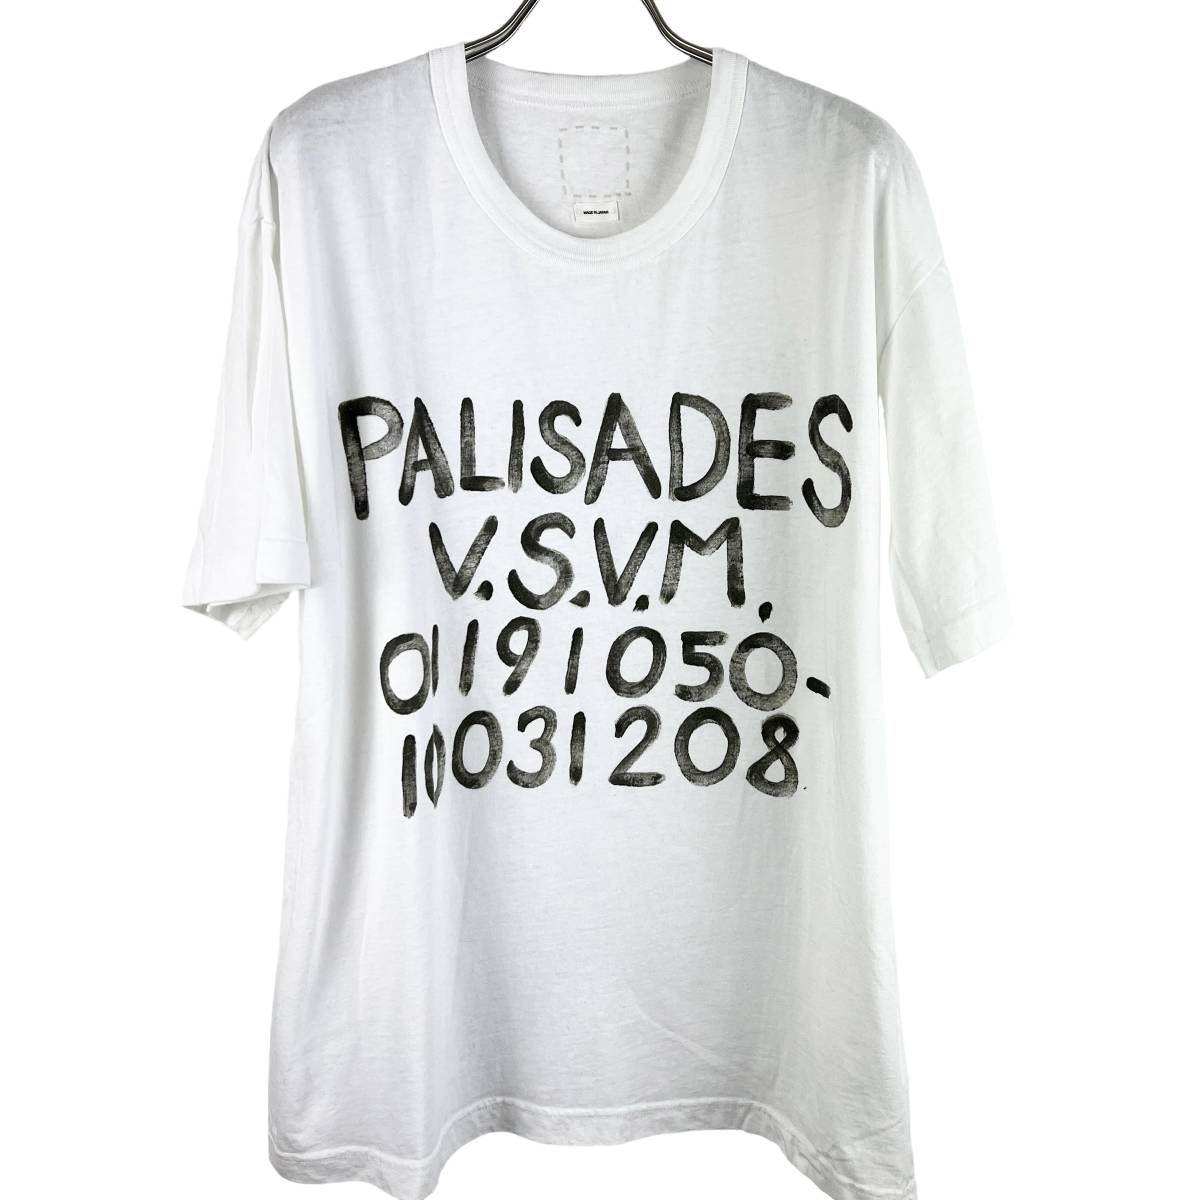 VISVIM(ビズビム) Palisades V.S.V.M. T Shirt (white)